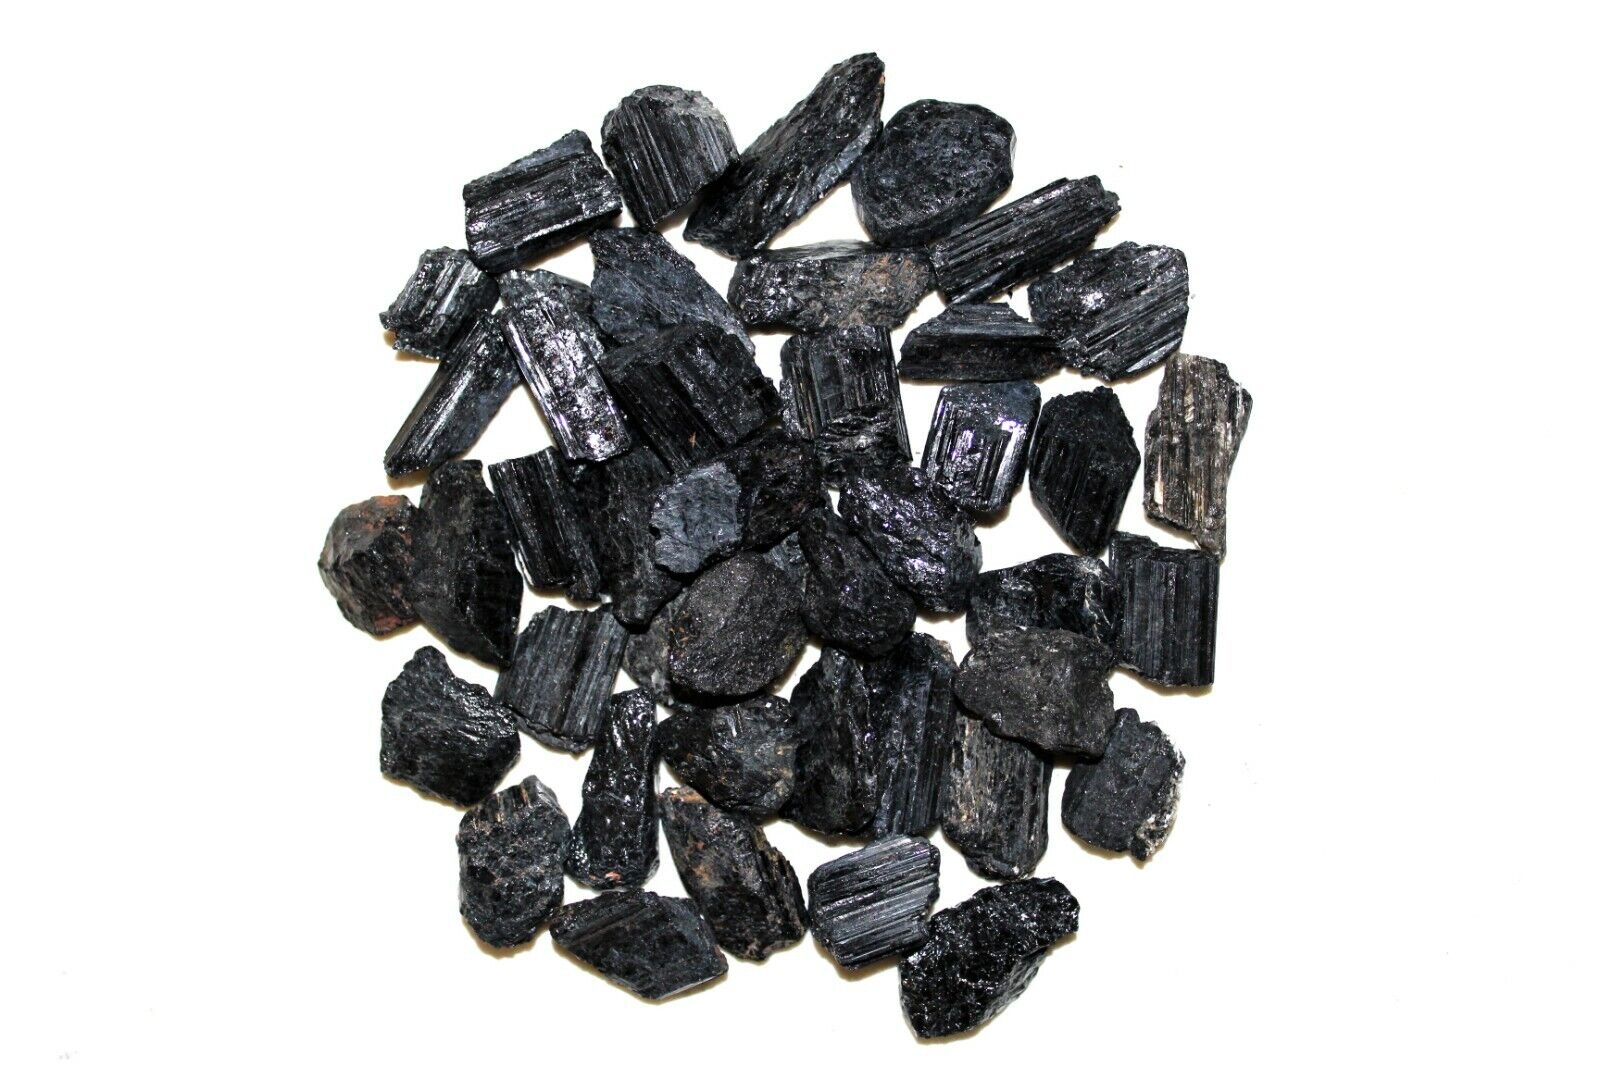 Black Tourmaline Rough Natural Stones 4 oz-5 lbs Bulk Wholesale Crystal Raw